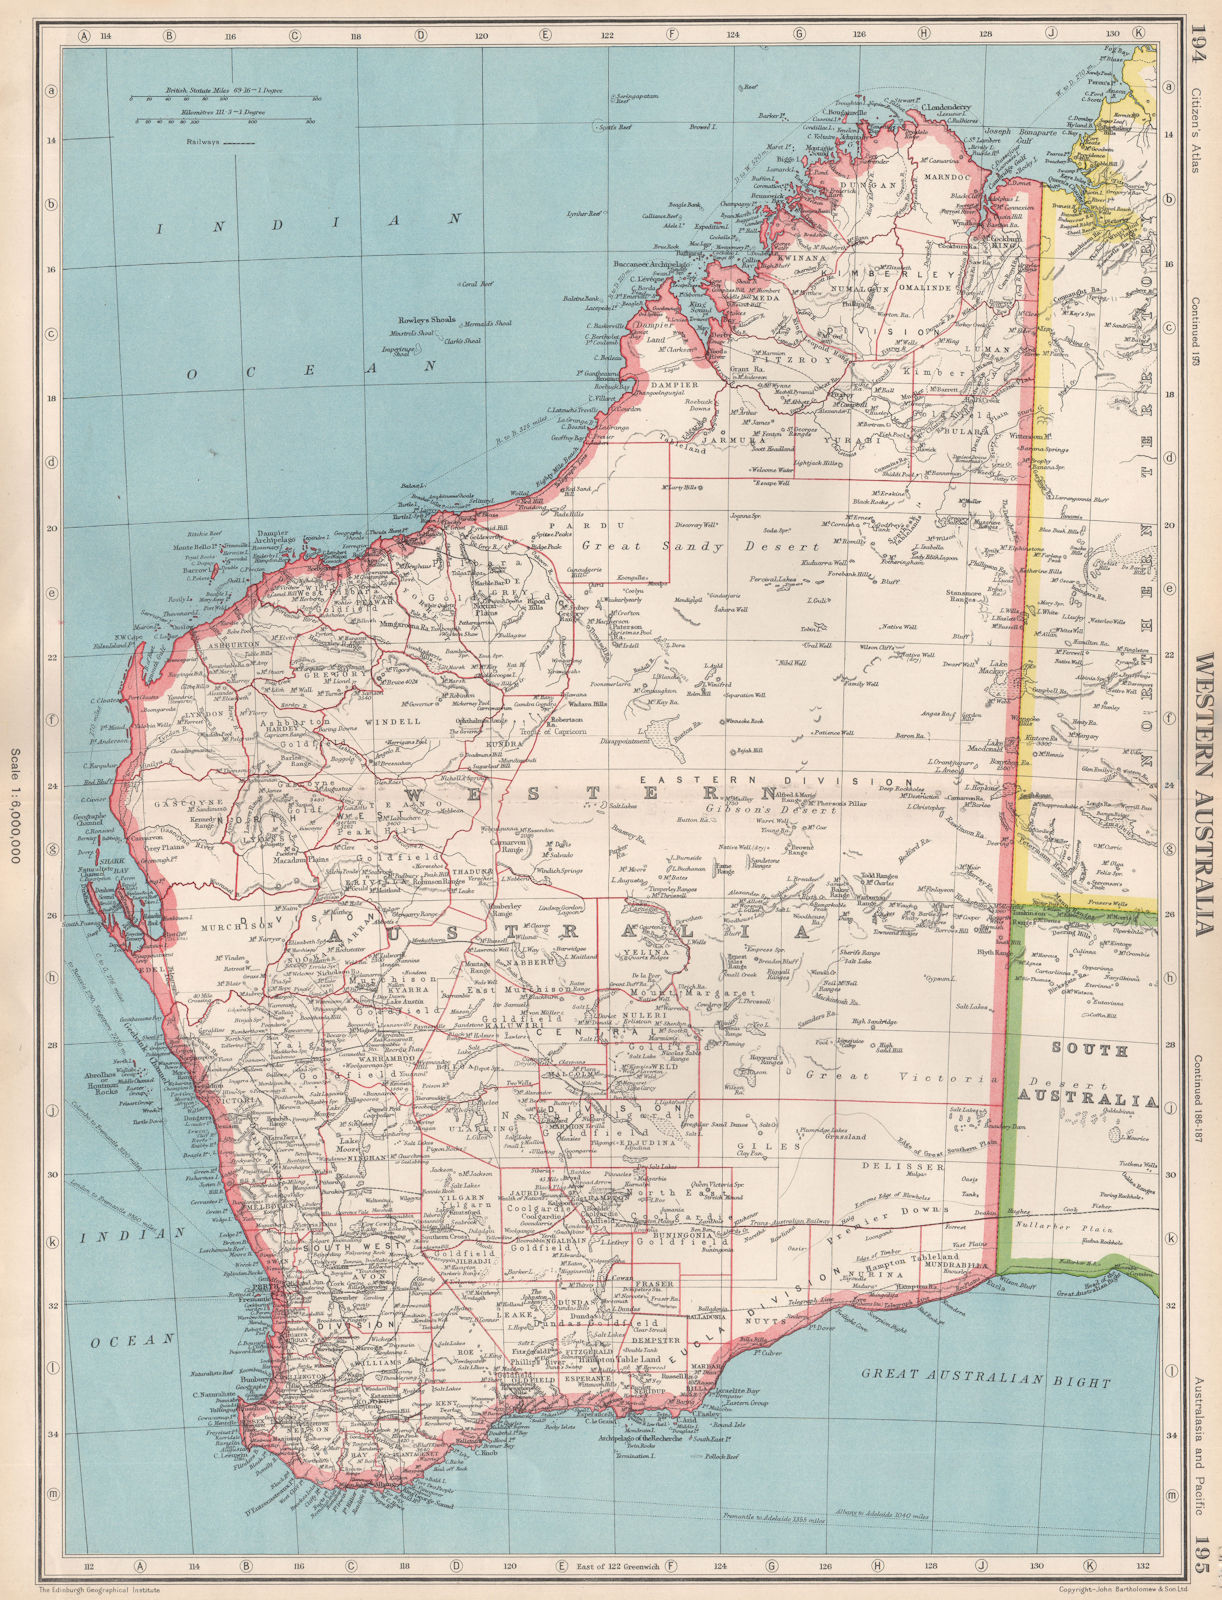 WESTERN AUSTRALIA. showing land districts & goldfields. BARTHOLOMEW 1952 map